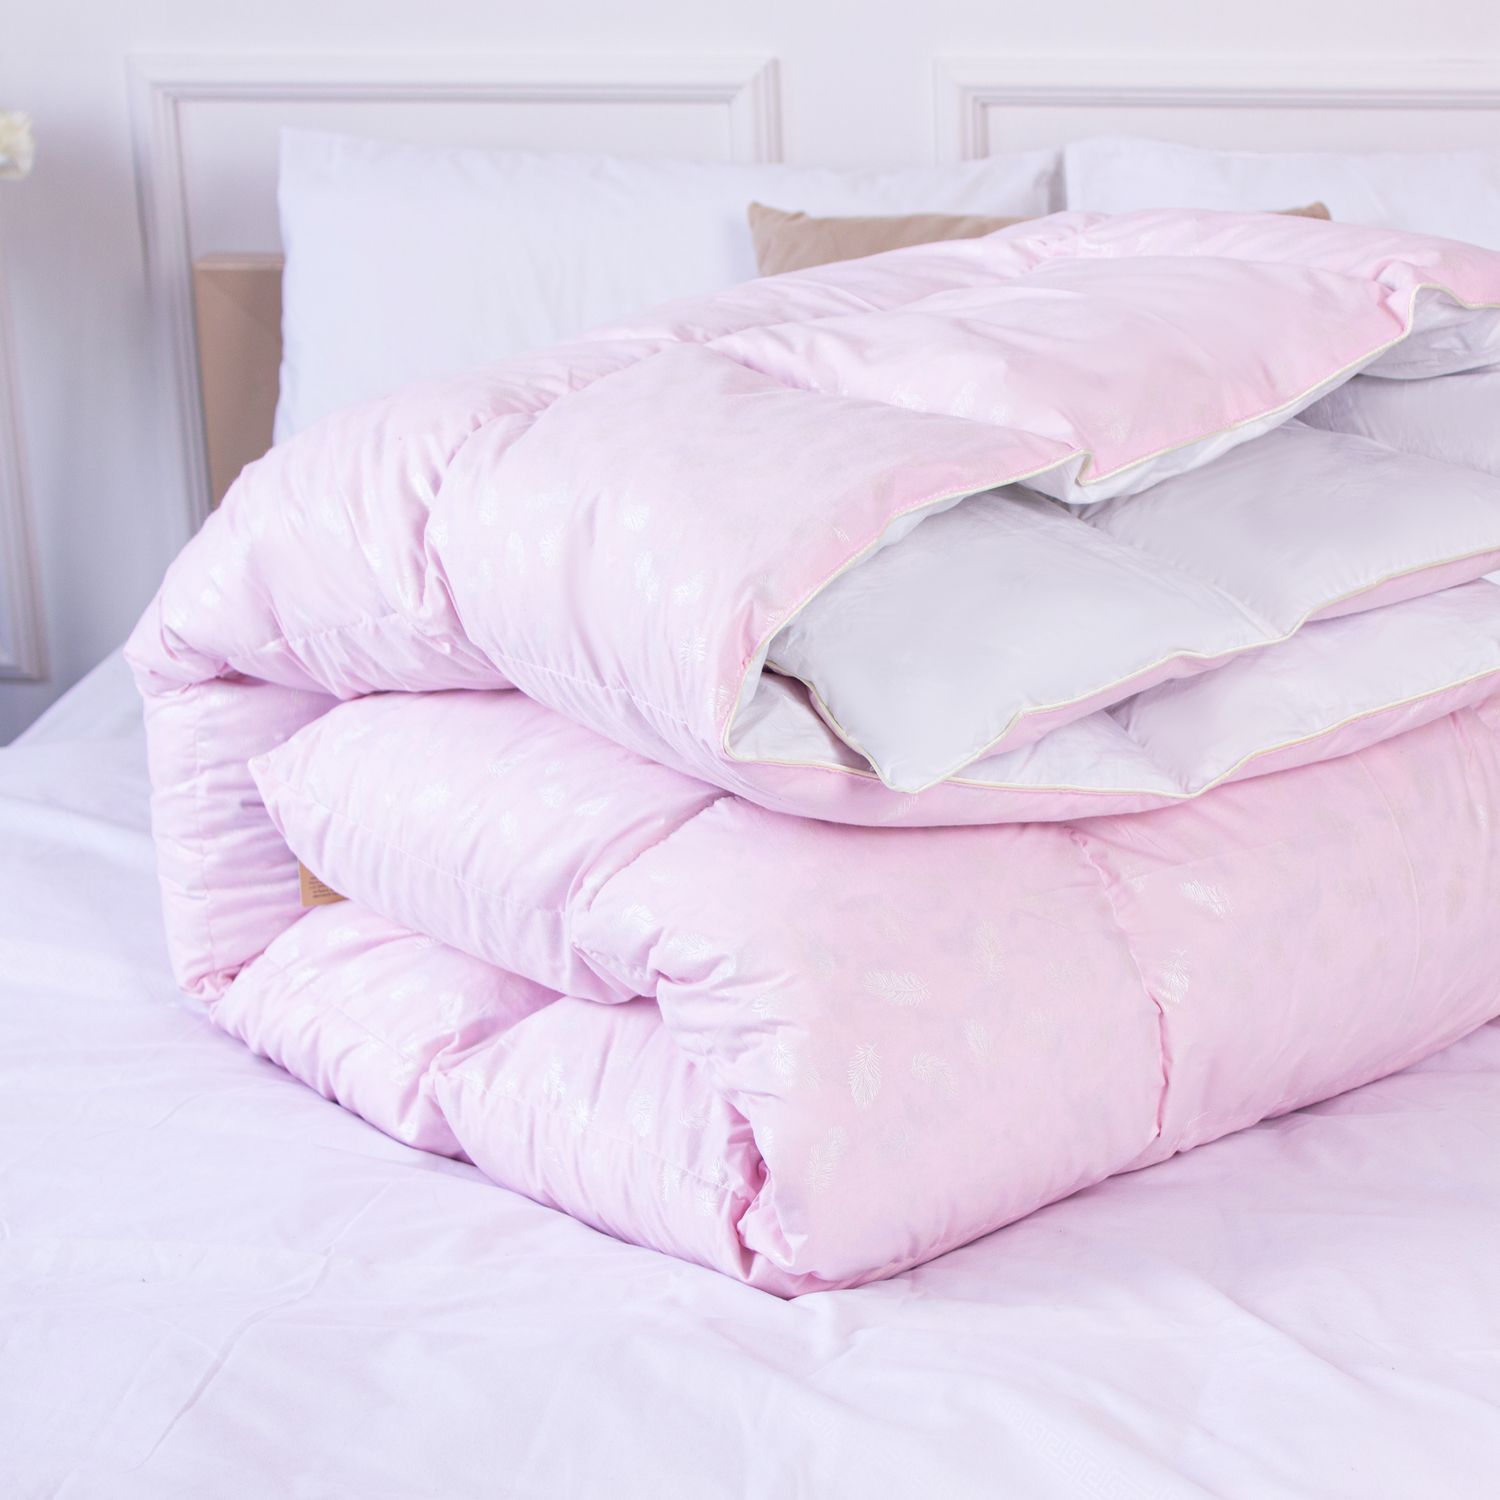 Одеяло пуховое MirSon Karmen №1841 Bio-Pink, 70% пух, двуспальное, 205x172, розовое (2200003013689) - фото 3